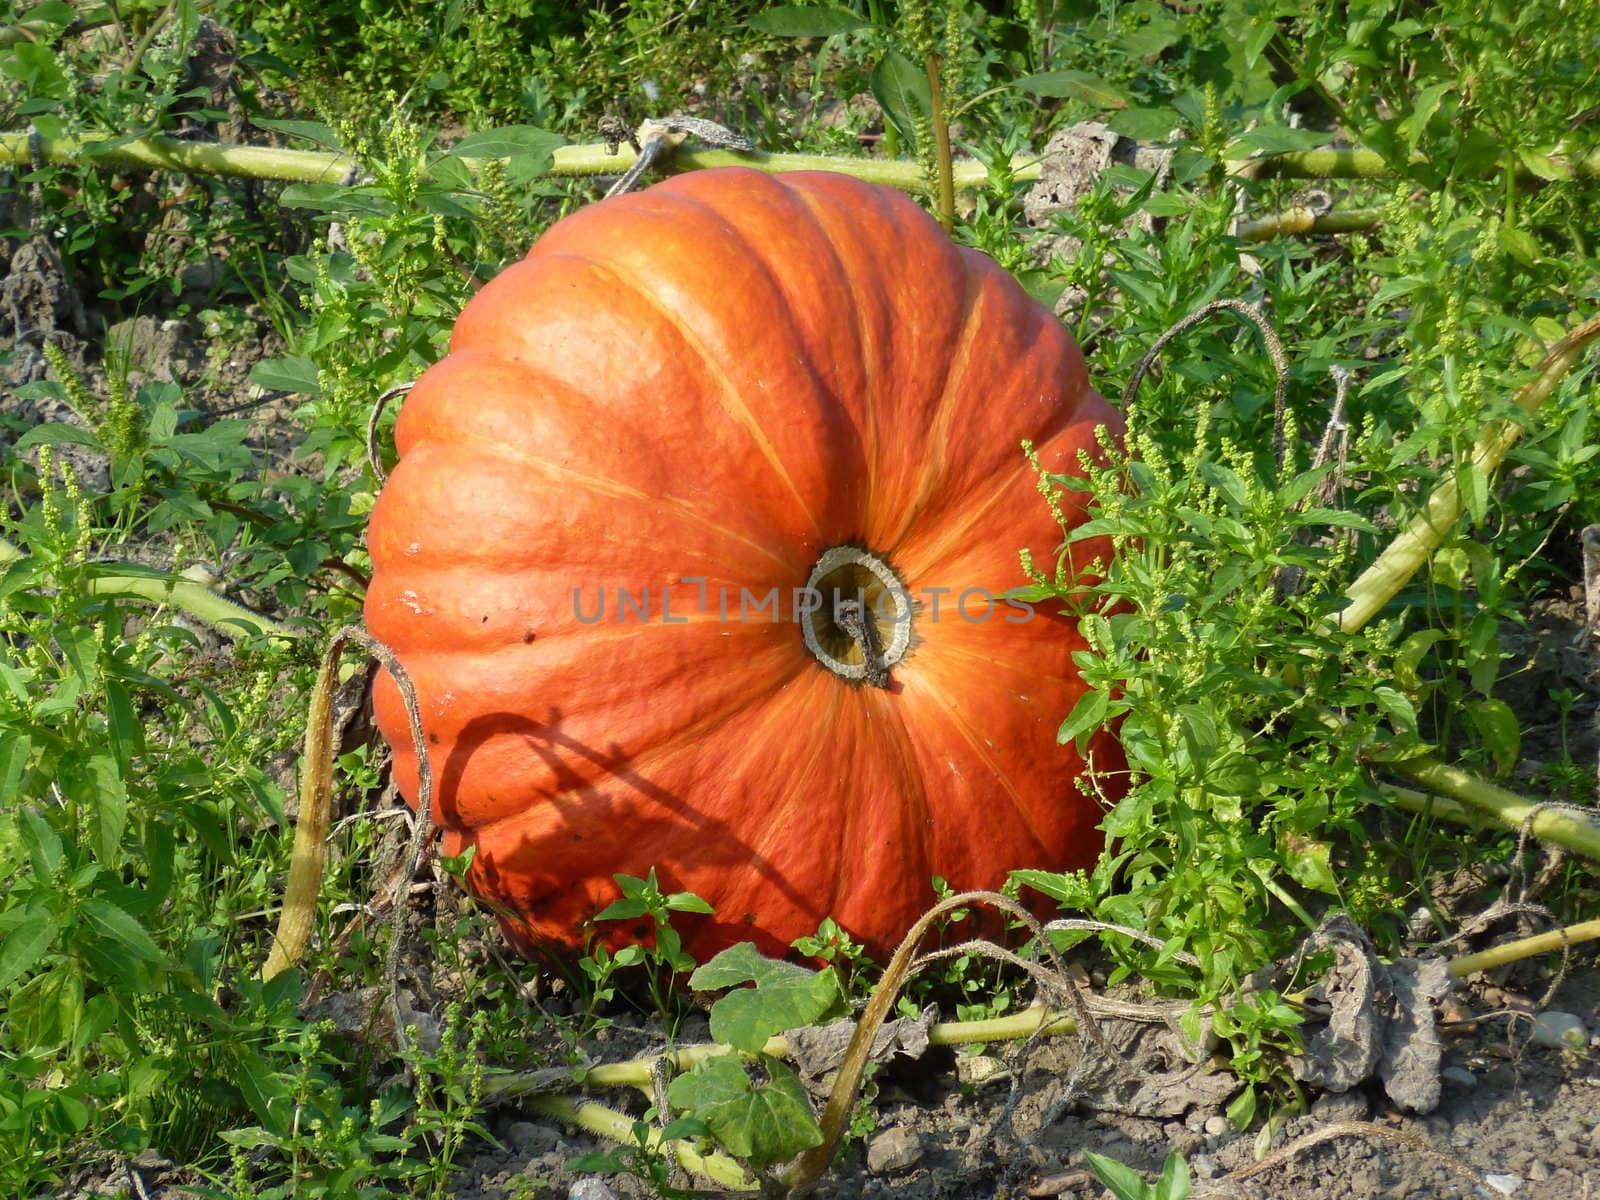 Orange pumpkin in green vegetation